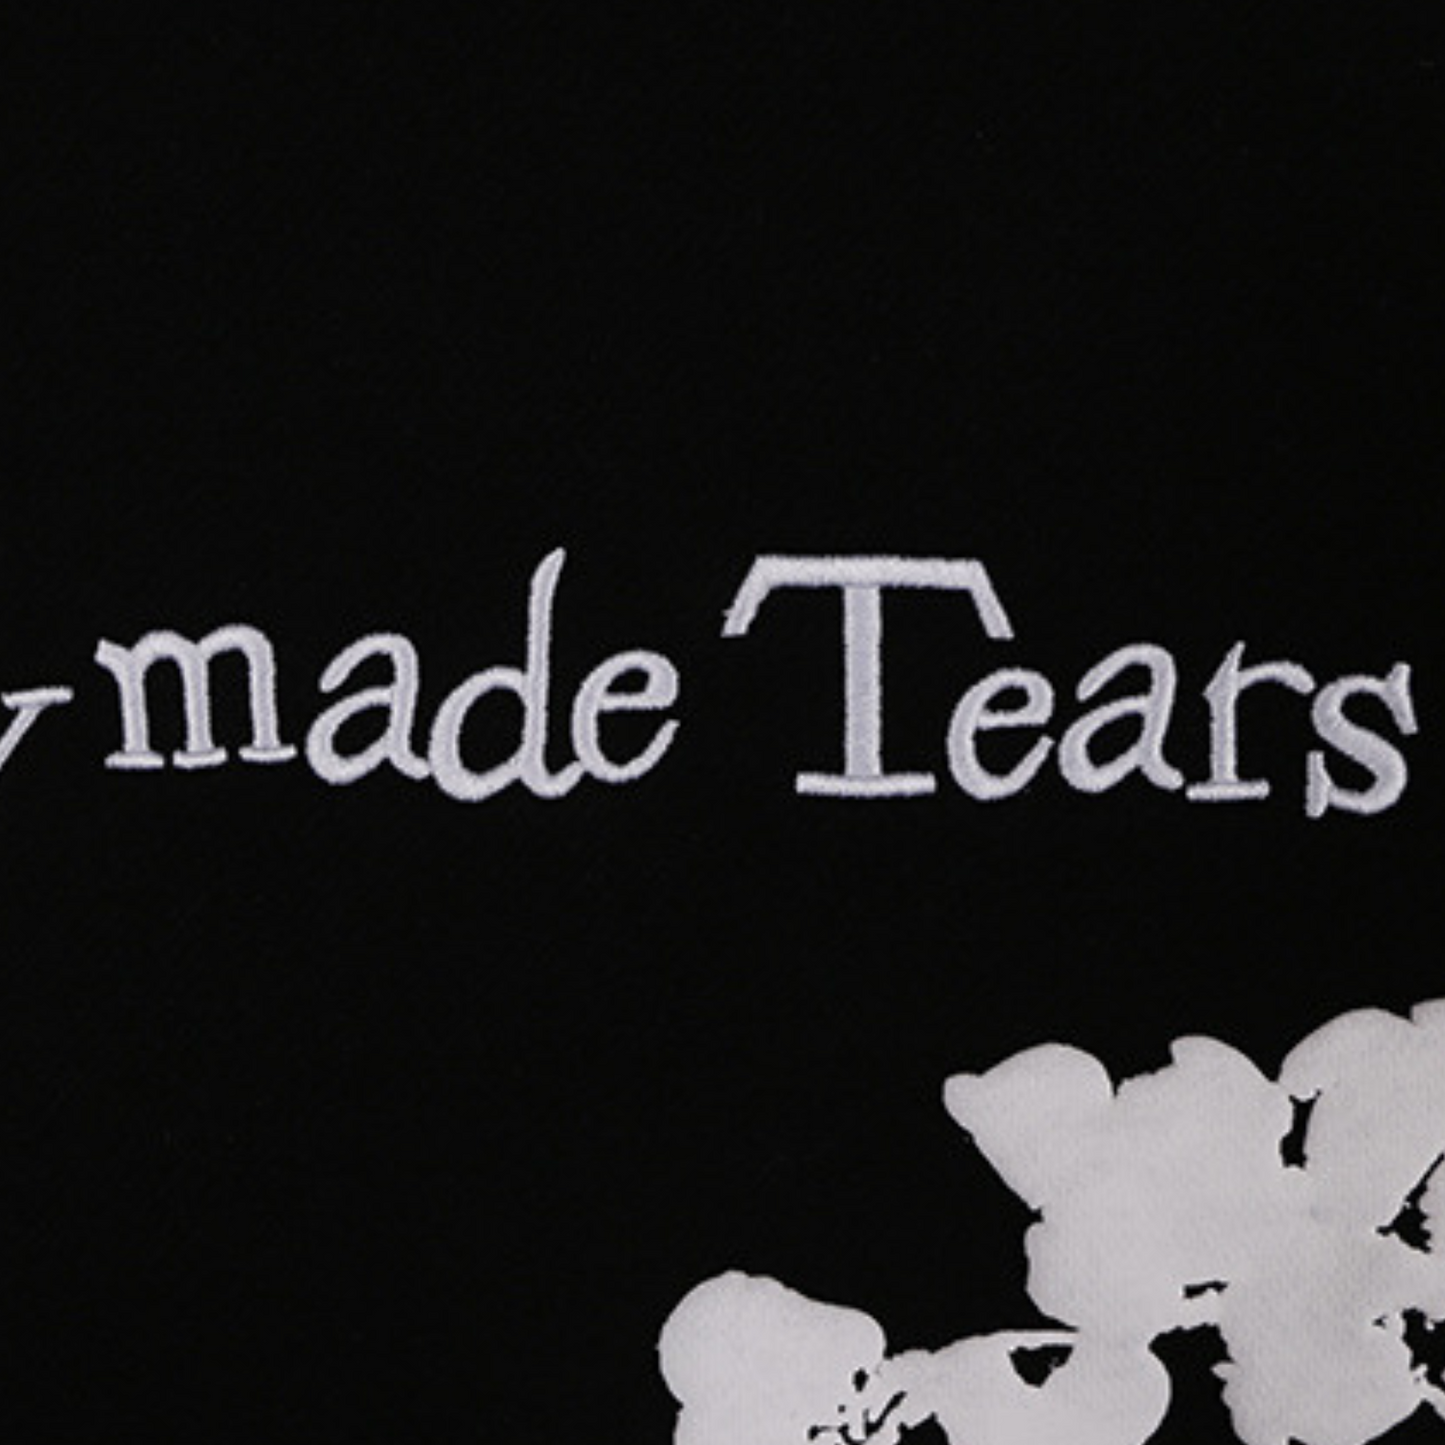 Embraided Ready Made Tears Streetwear Hoodie